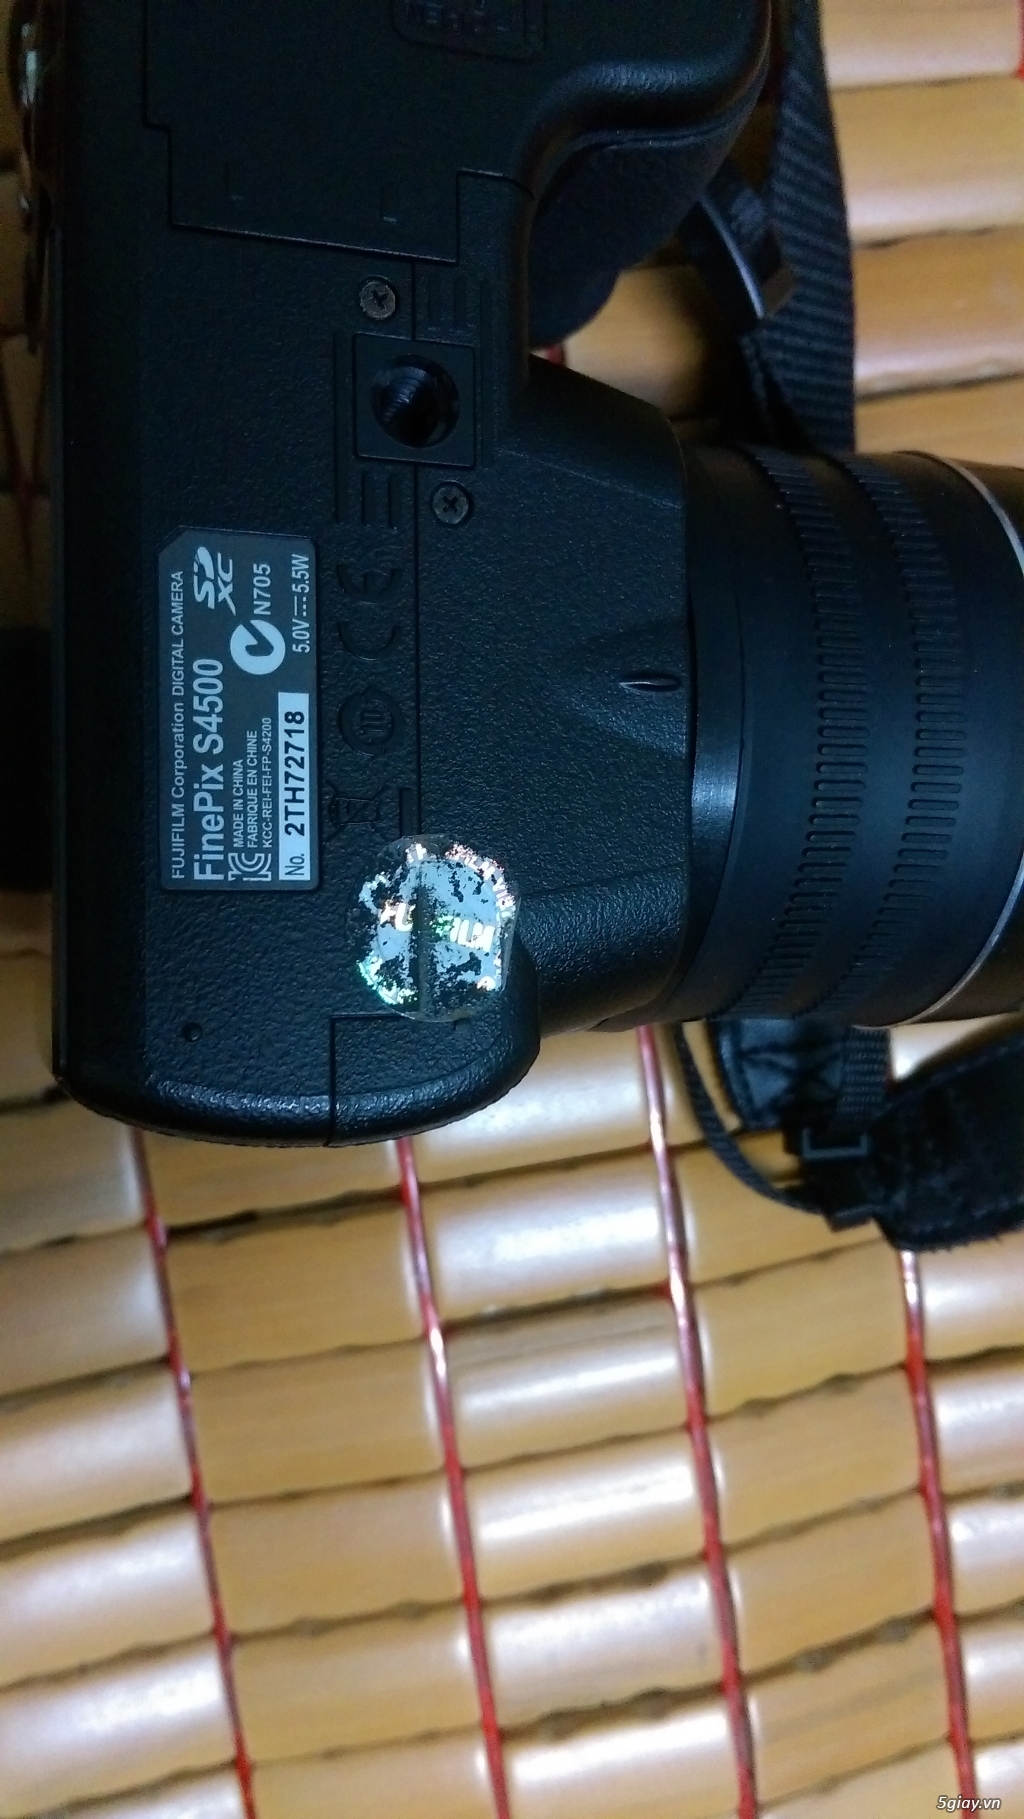 Bán máy ảnh siêu zoom Fujifilm S4500 - 4